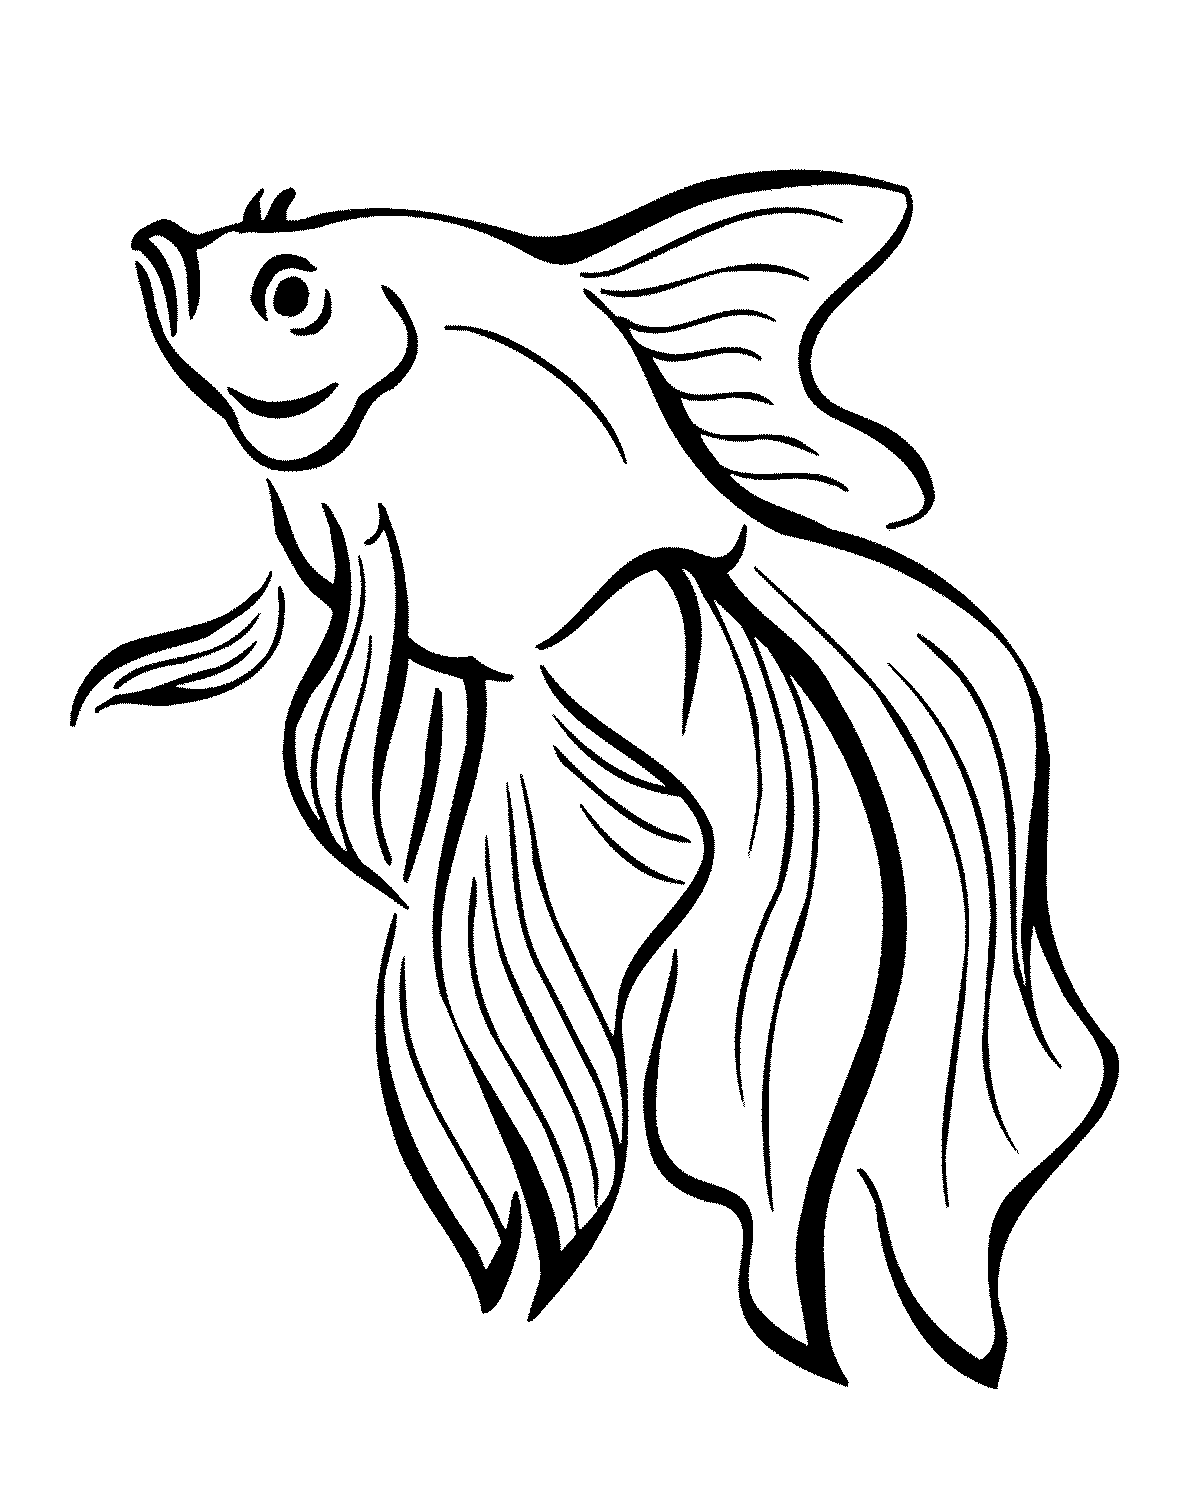  Gambar  Lukisan Ikan  Hitam  Putih  Cikimm com